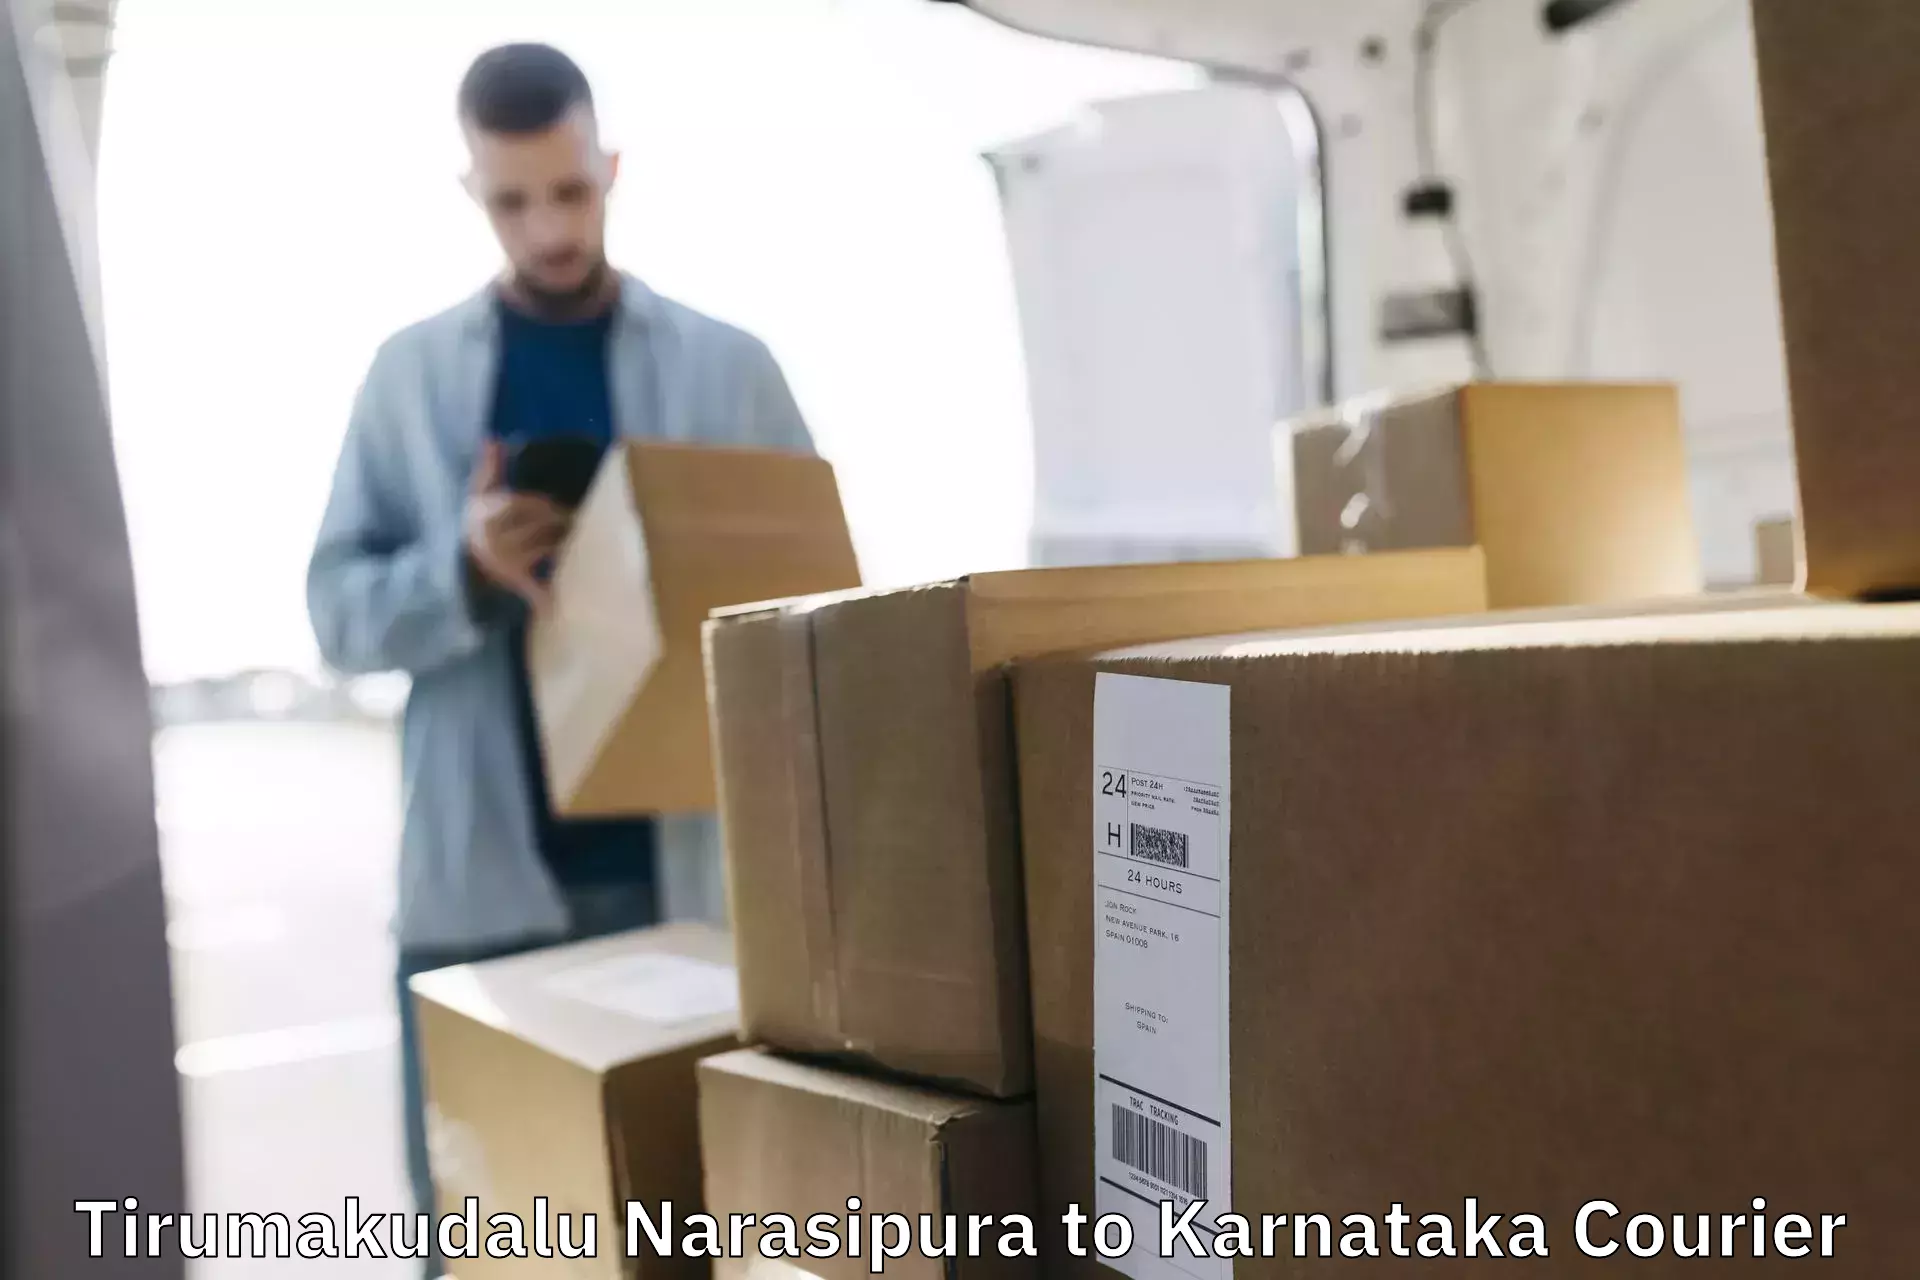 Courier service comparison Tirumakudalu Narasipura to Karnataka